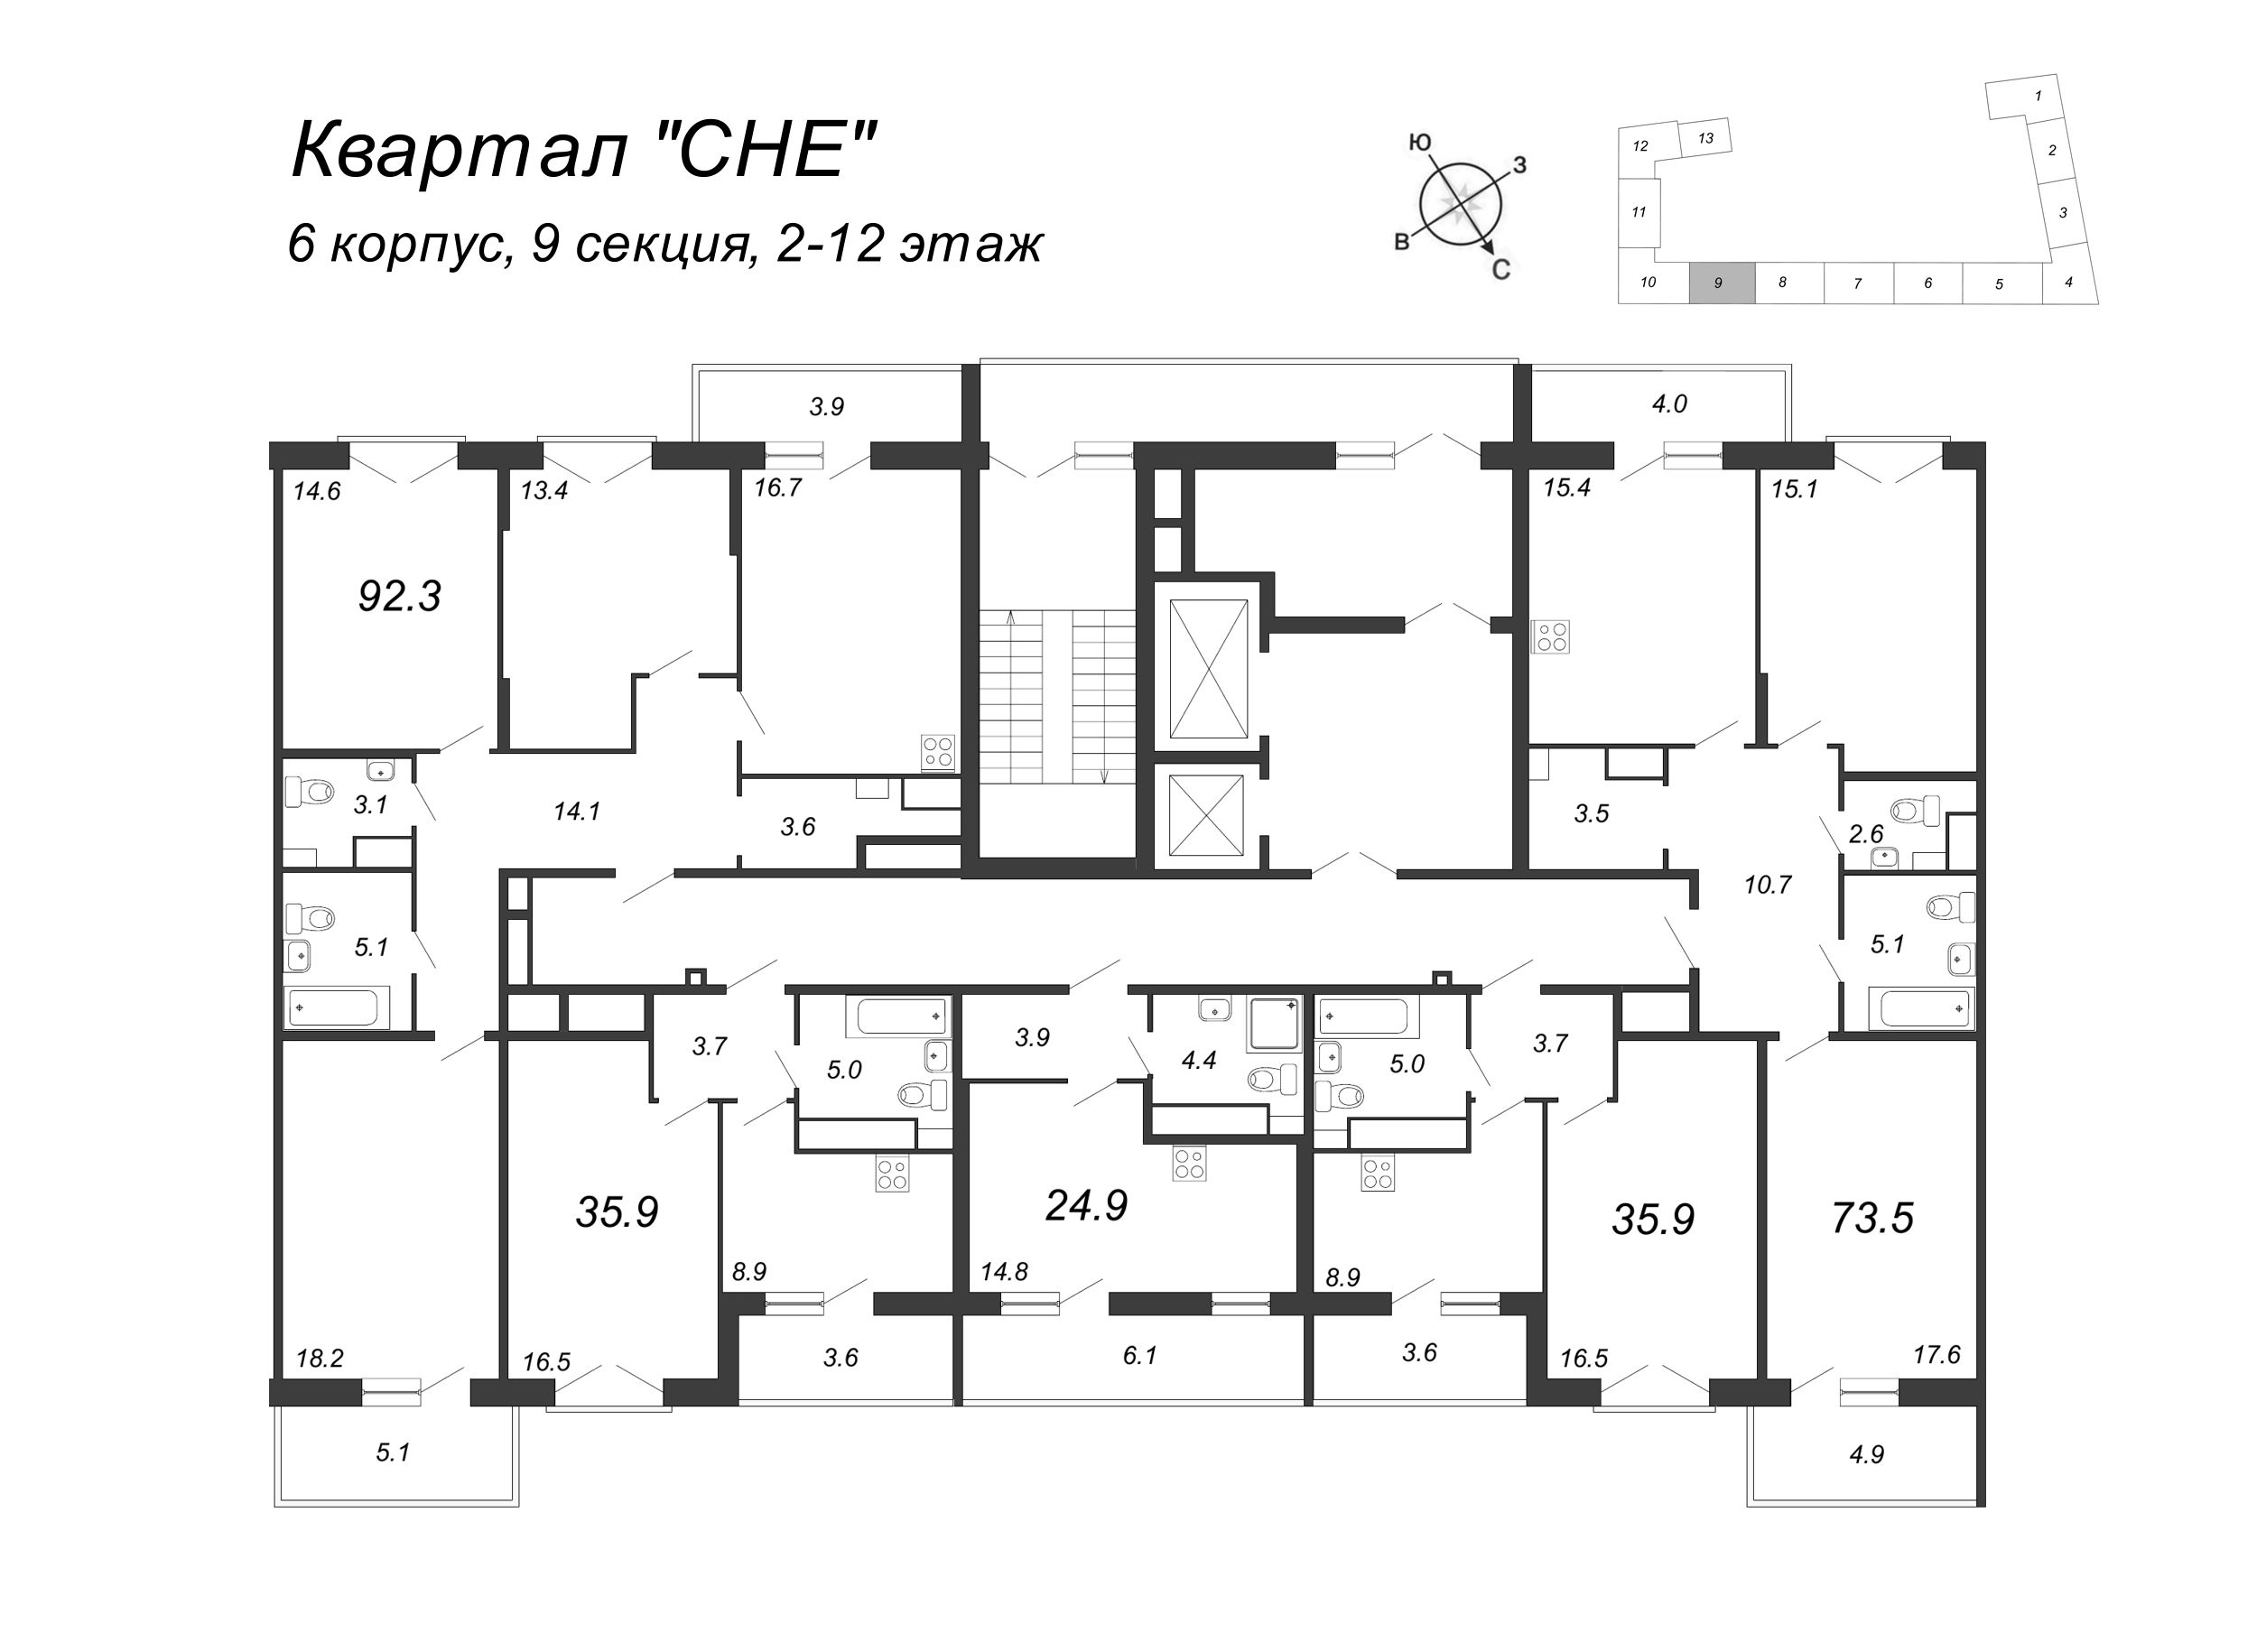 1-комнатная квартира, 36.3 м² в ЖК "Квартал Che" - планировка этажа